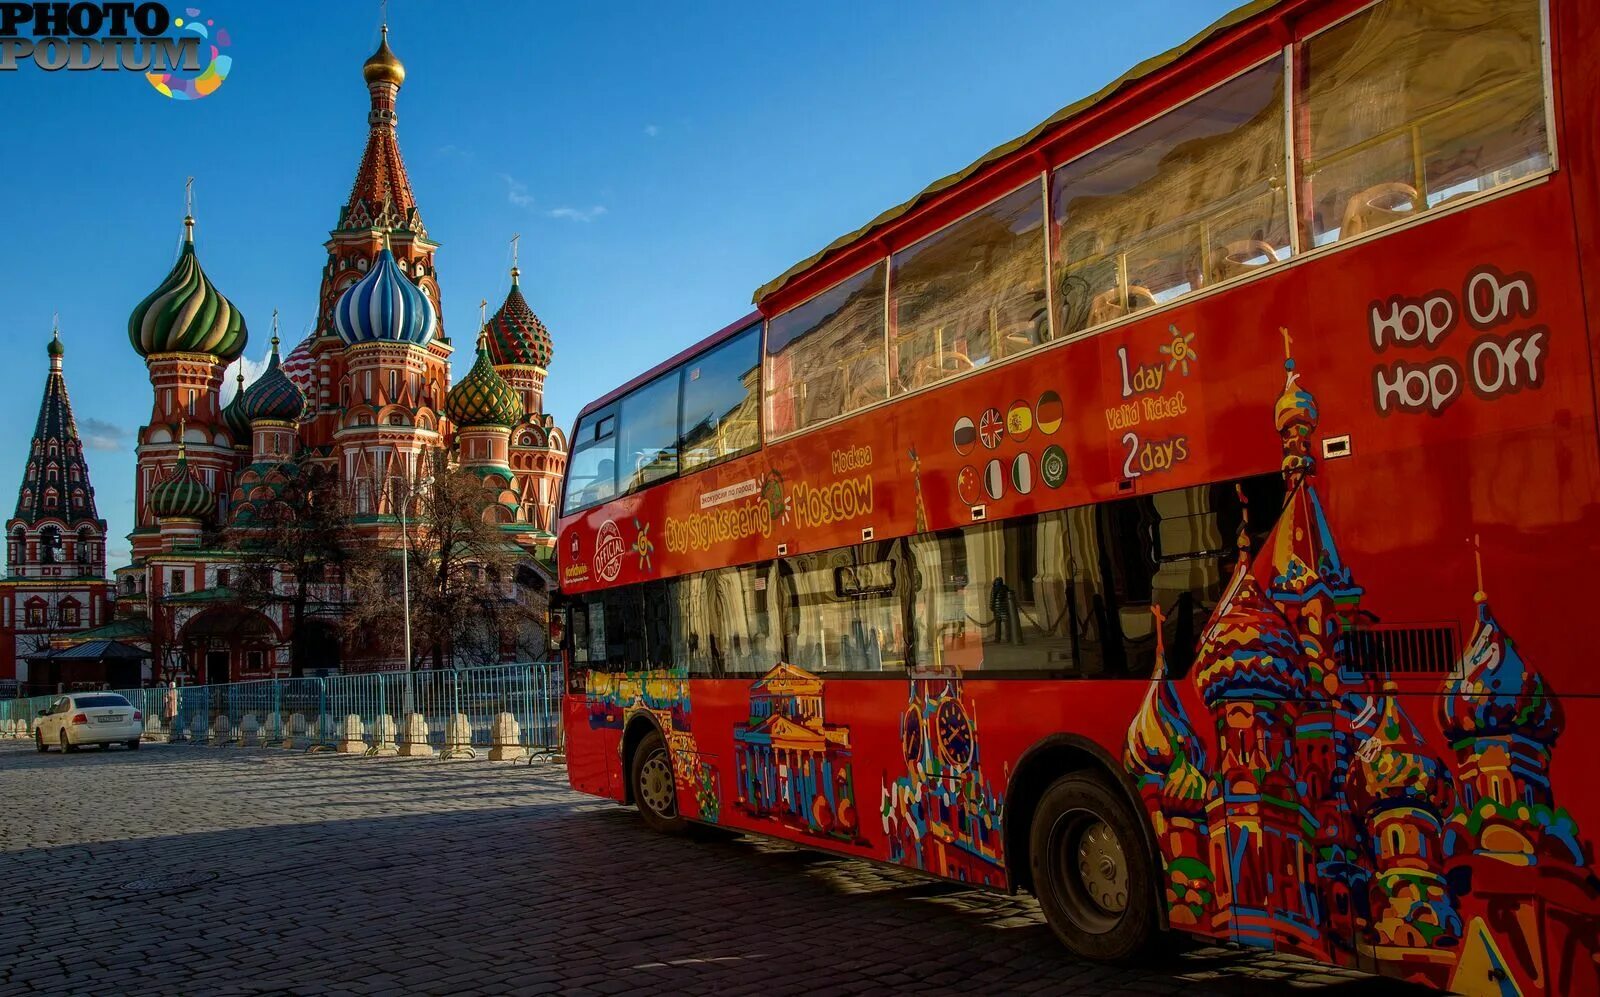 Автобус City Sightseeing Москва. City Sightseeing Moscow автобус. Красный автобус City Sightseeing. Автобус Сити сайтсиинг Москва.